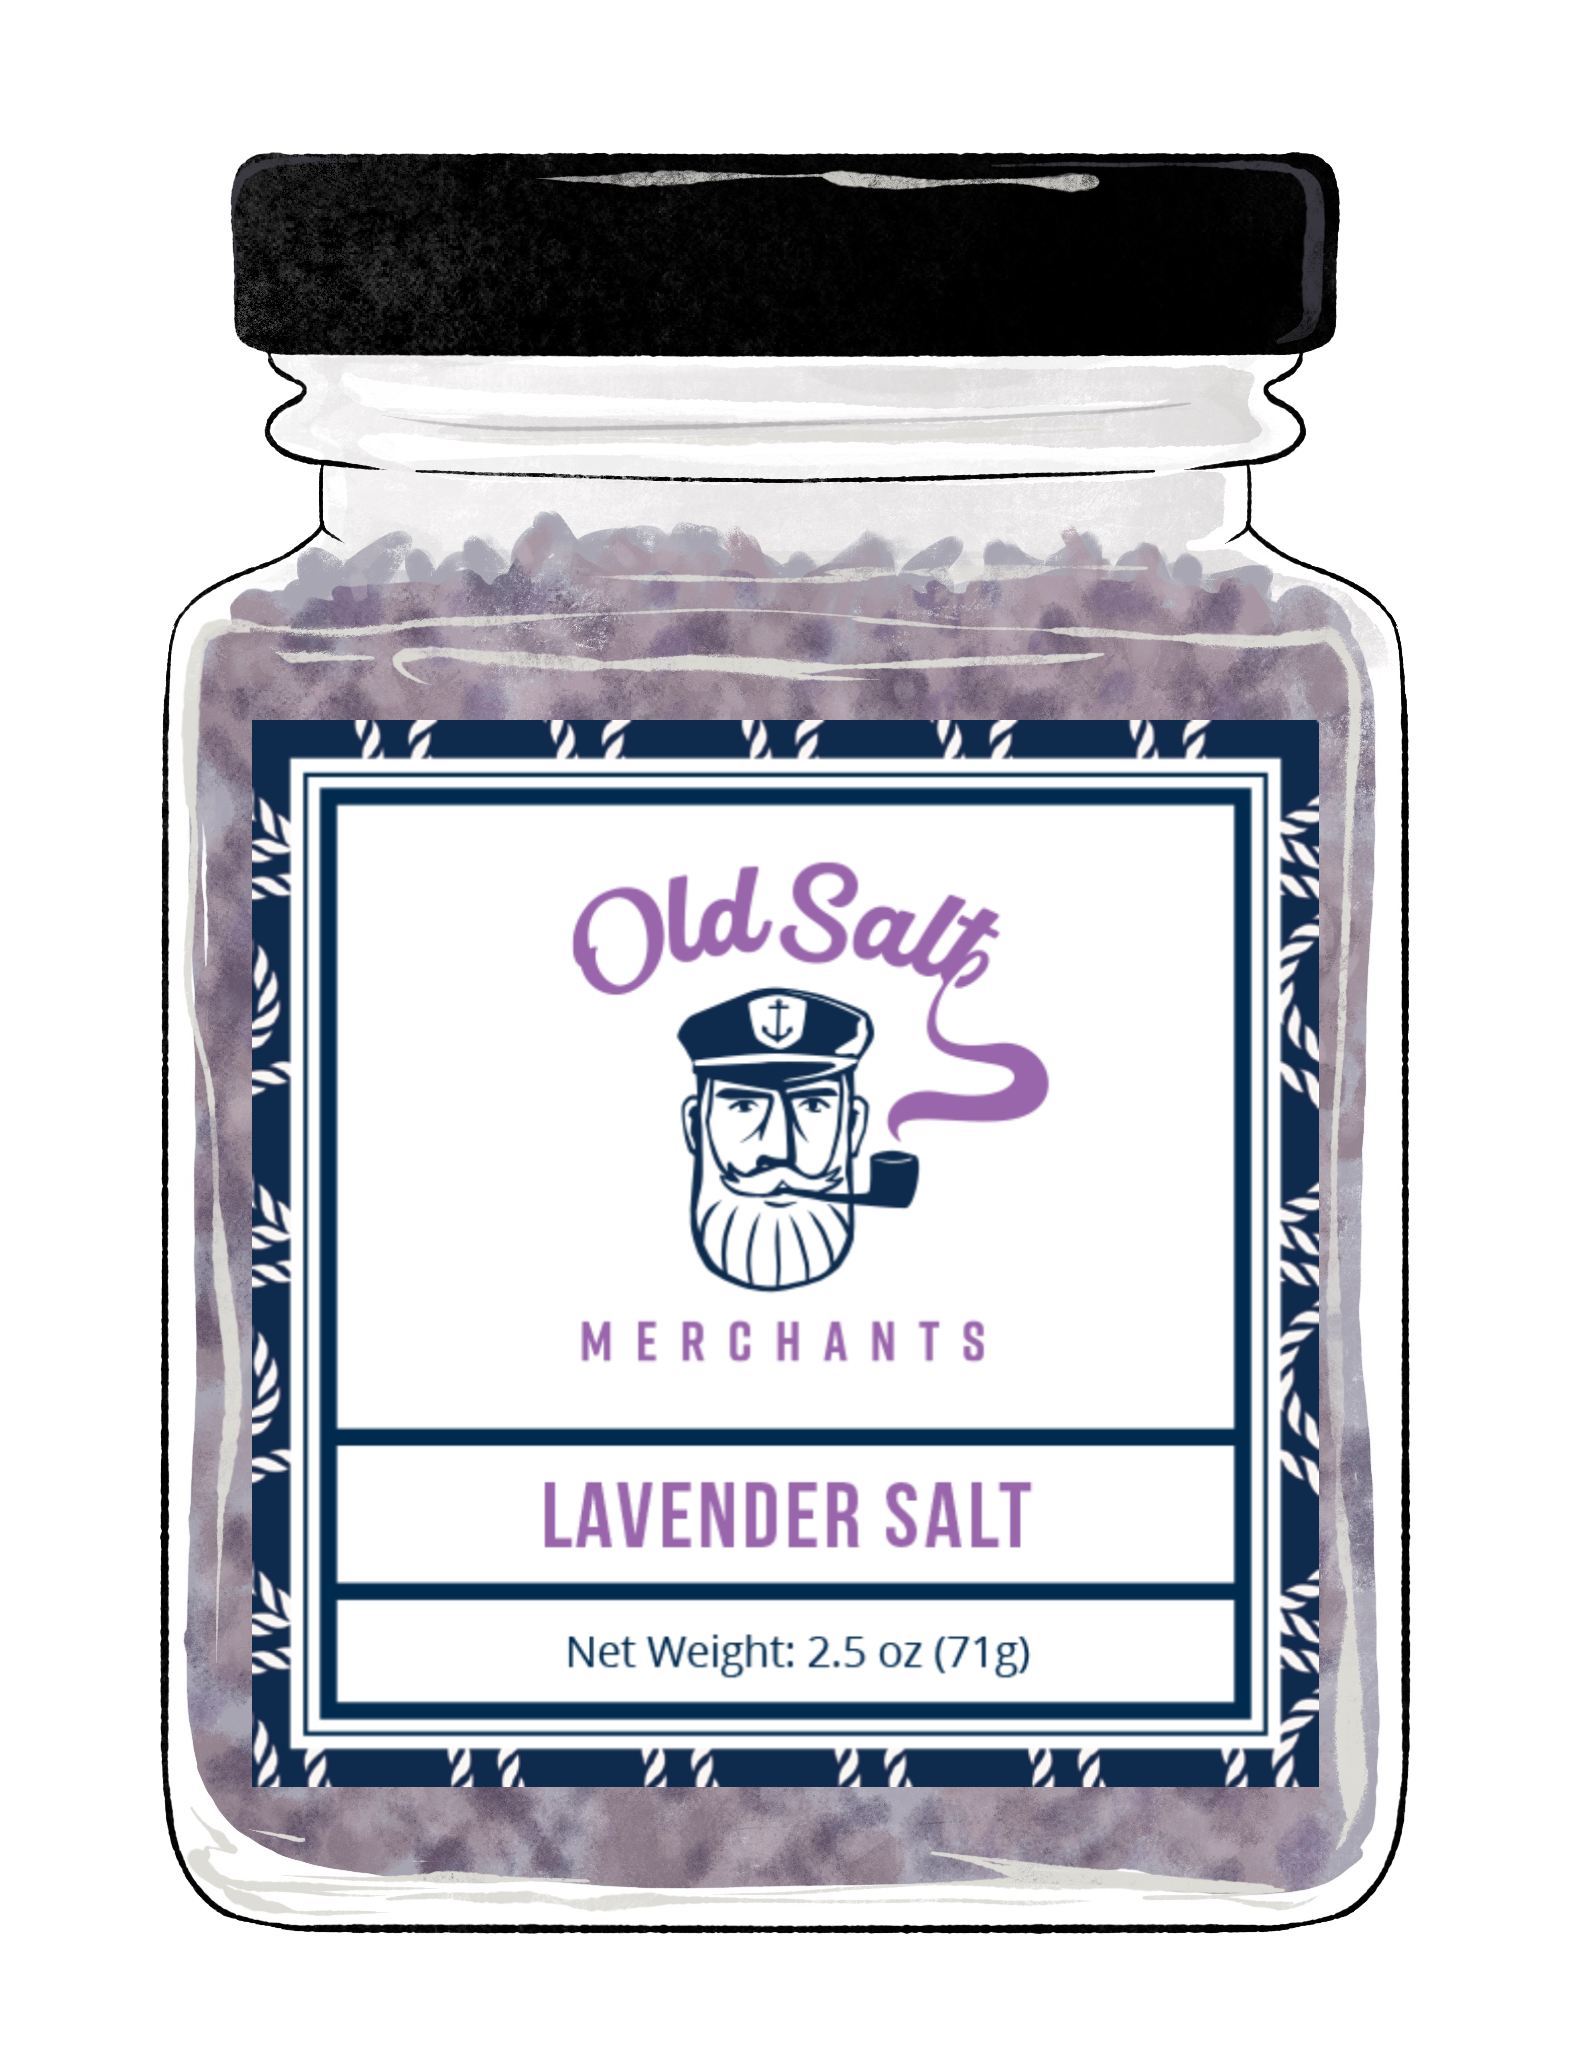 Lavender Salt exclusive at Tastermonial